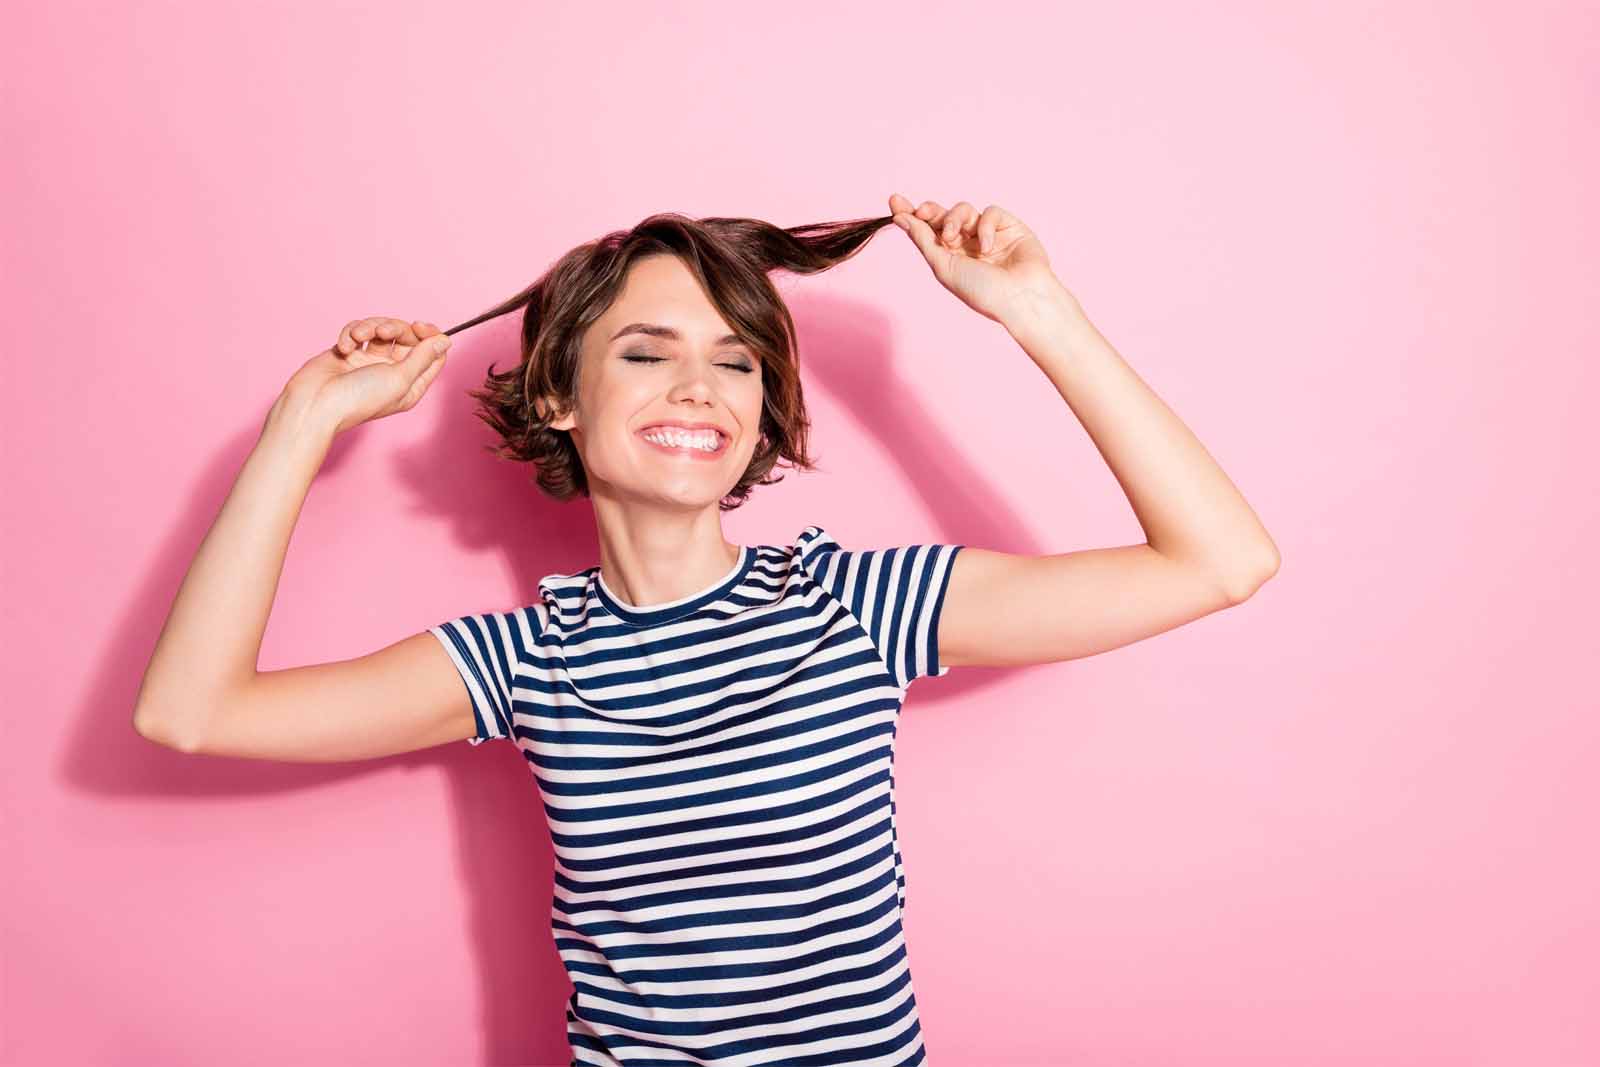 Chica sonriente con camiseta de rayas tocándose el pelo, con un corte de pelo bob a capas